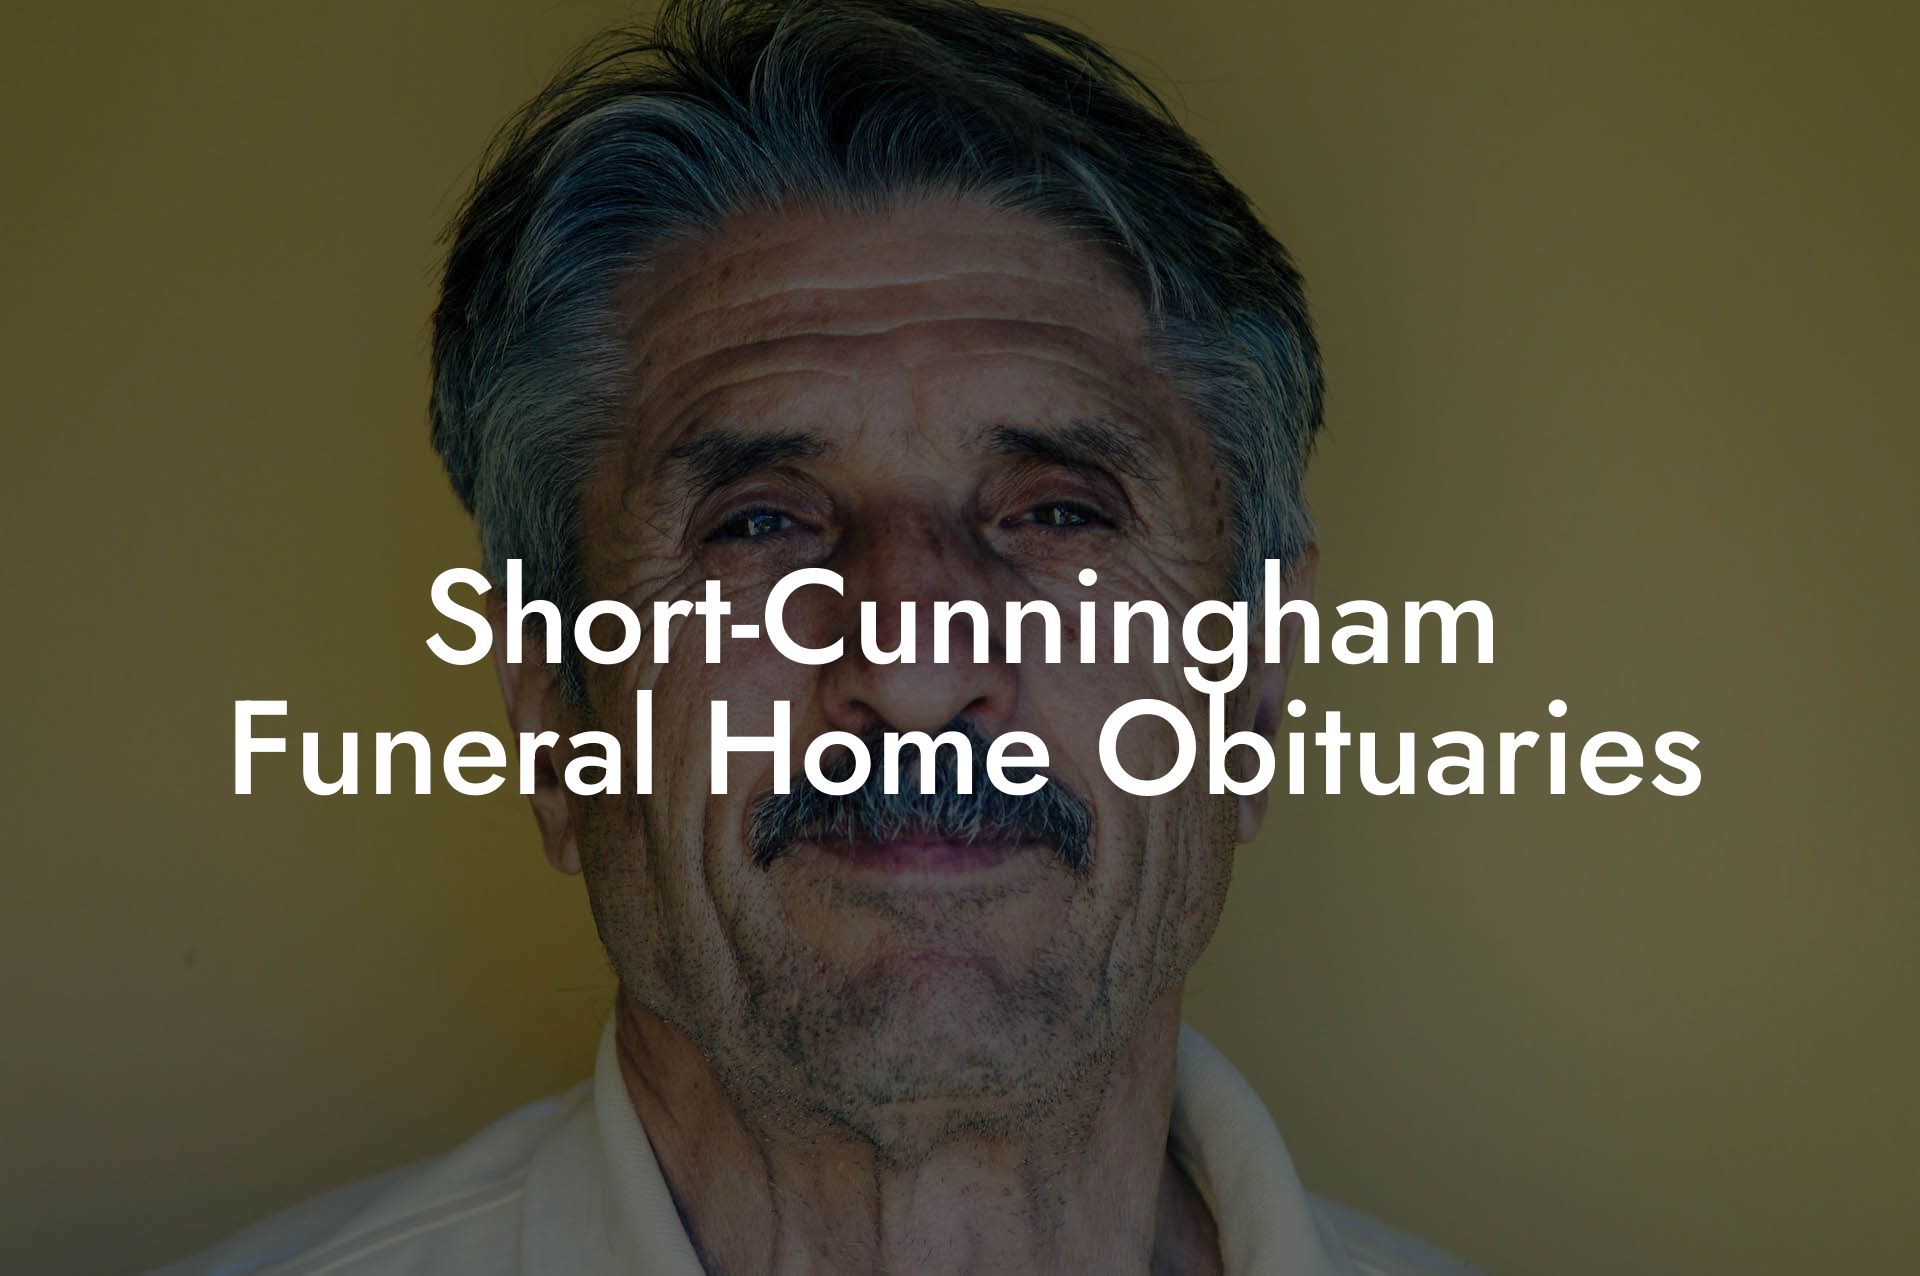 Short-Cunningham Funeral Home Obituaries